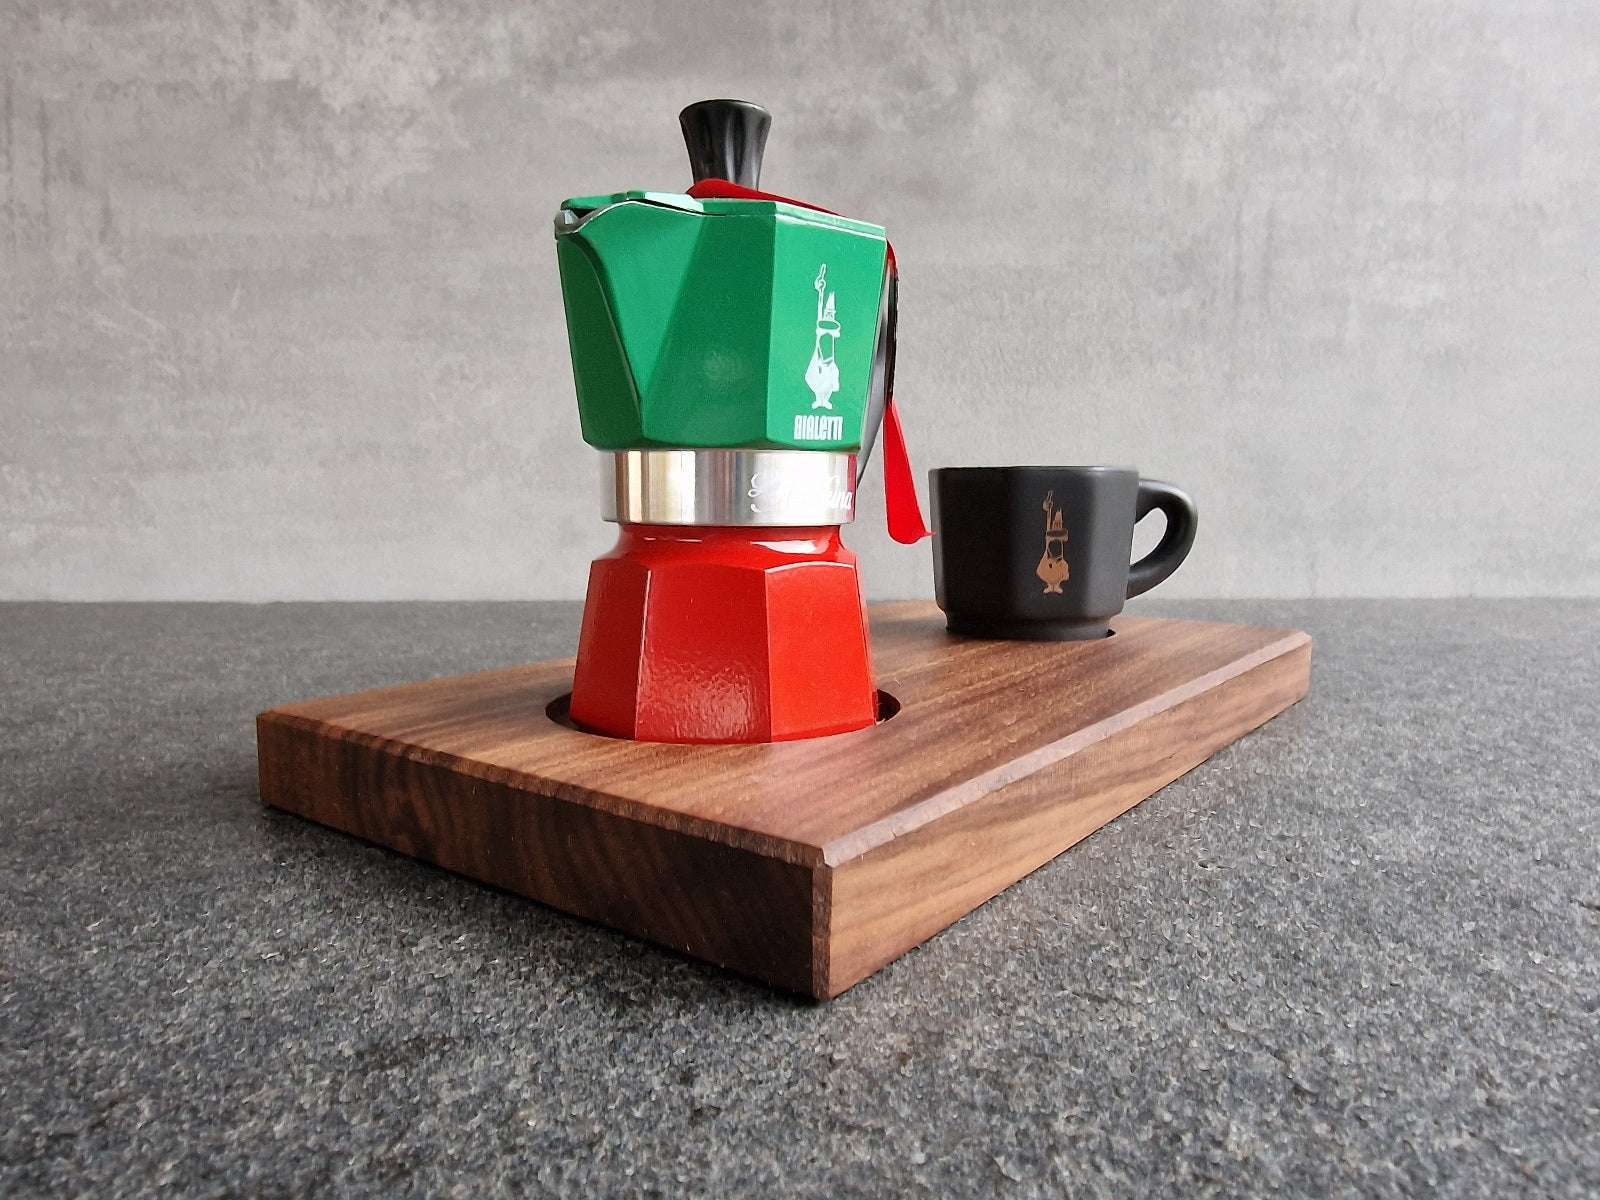 Bialetti Espressokocher Tricolore für 1 Tasse mit einer Bialetti Espressotasse und einem edlem Nussbaumtablett